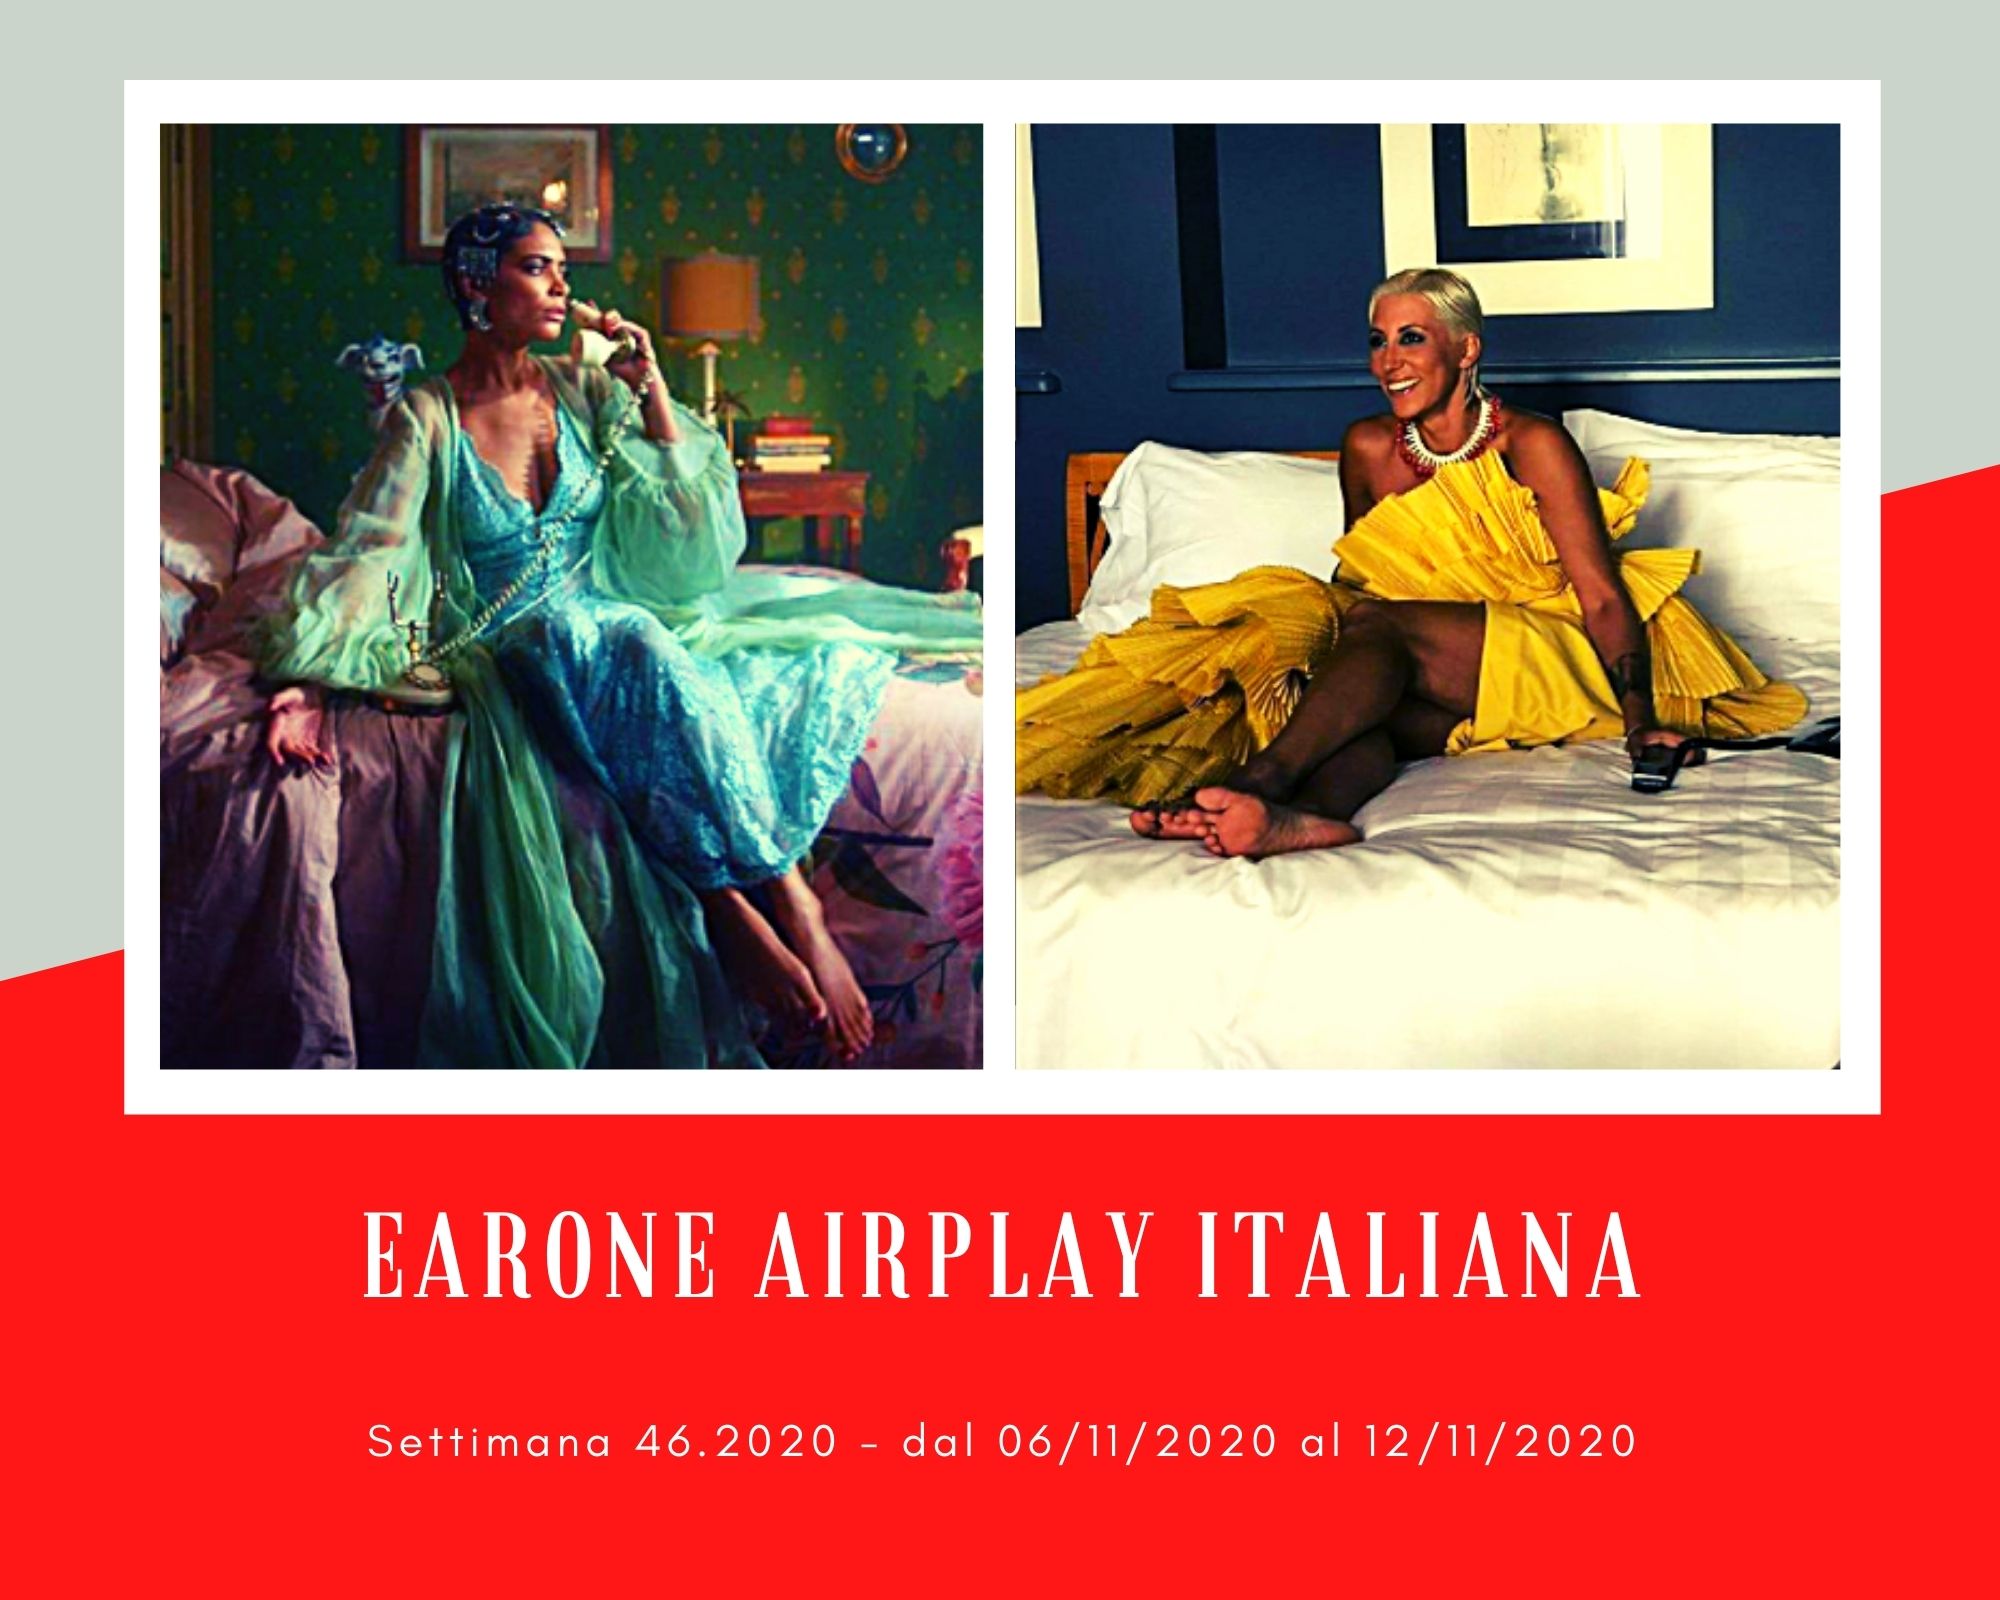 Classifica Radio EARONE Airplay Italiana, week 46. Elodie e Malika Ayane sorpassano in coppia